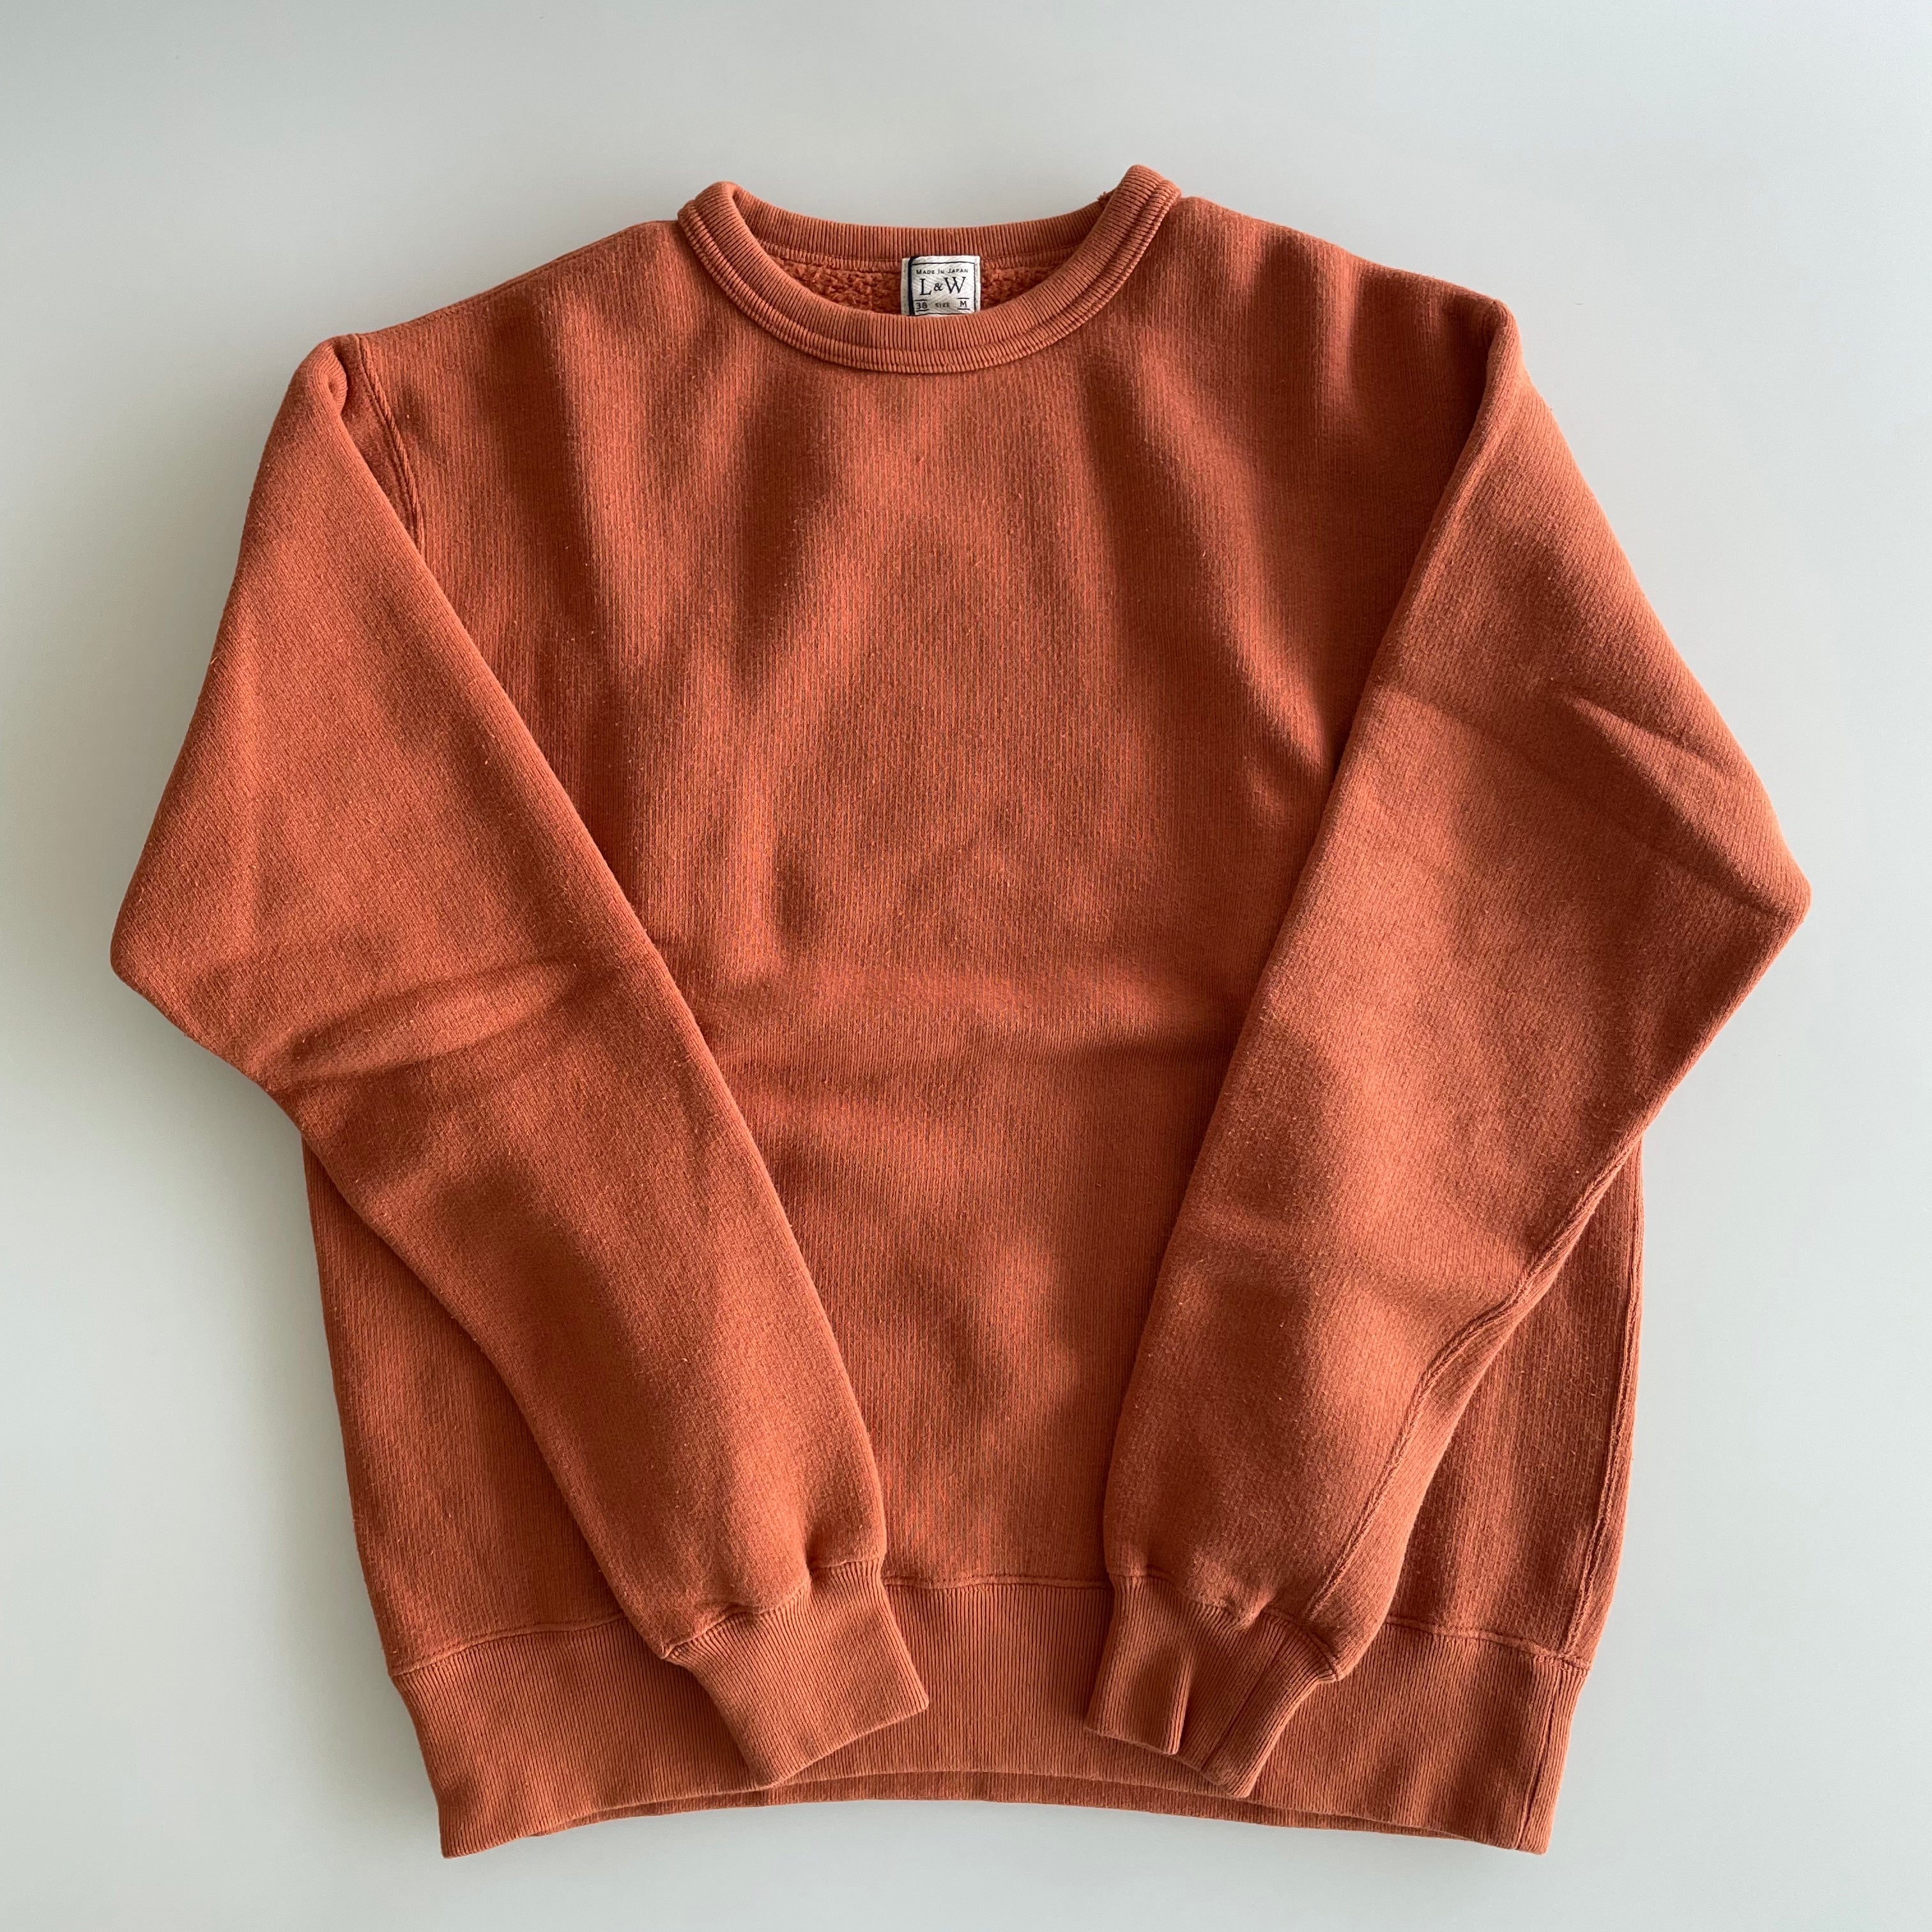 Tompkin's Knit Crew Neck Sweatshirt in Orange Brown